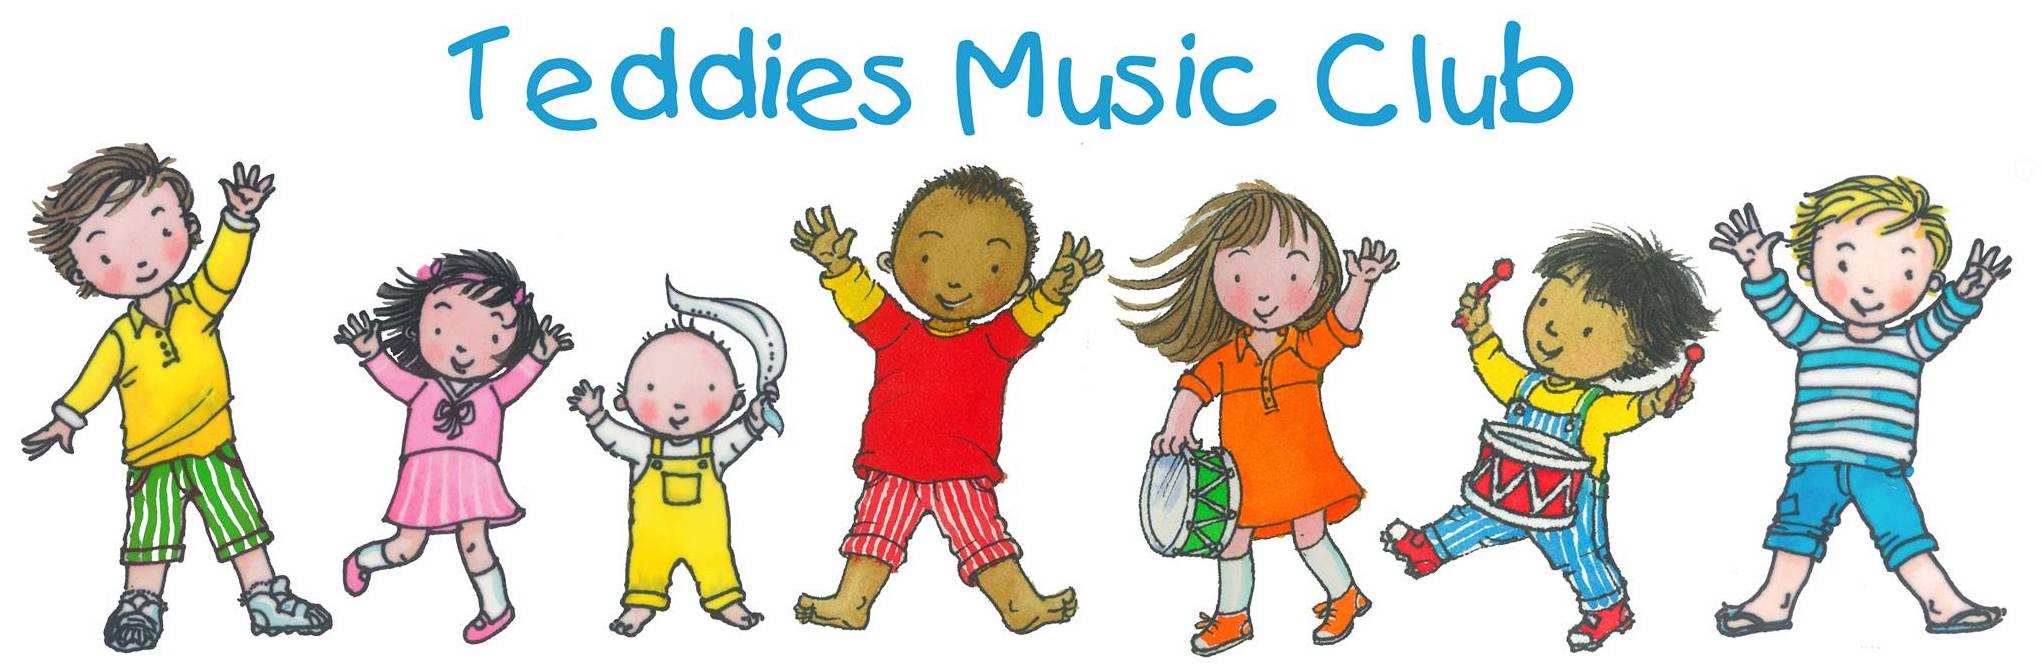 Teddies Music Club's main image